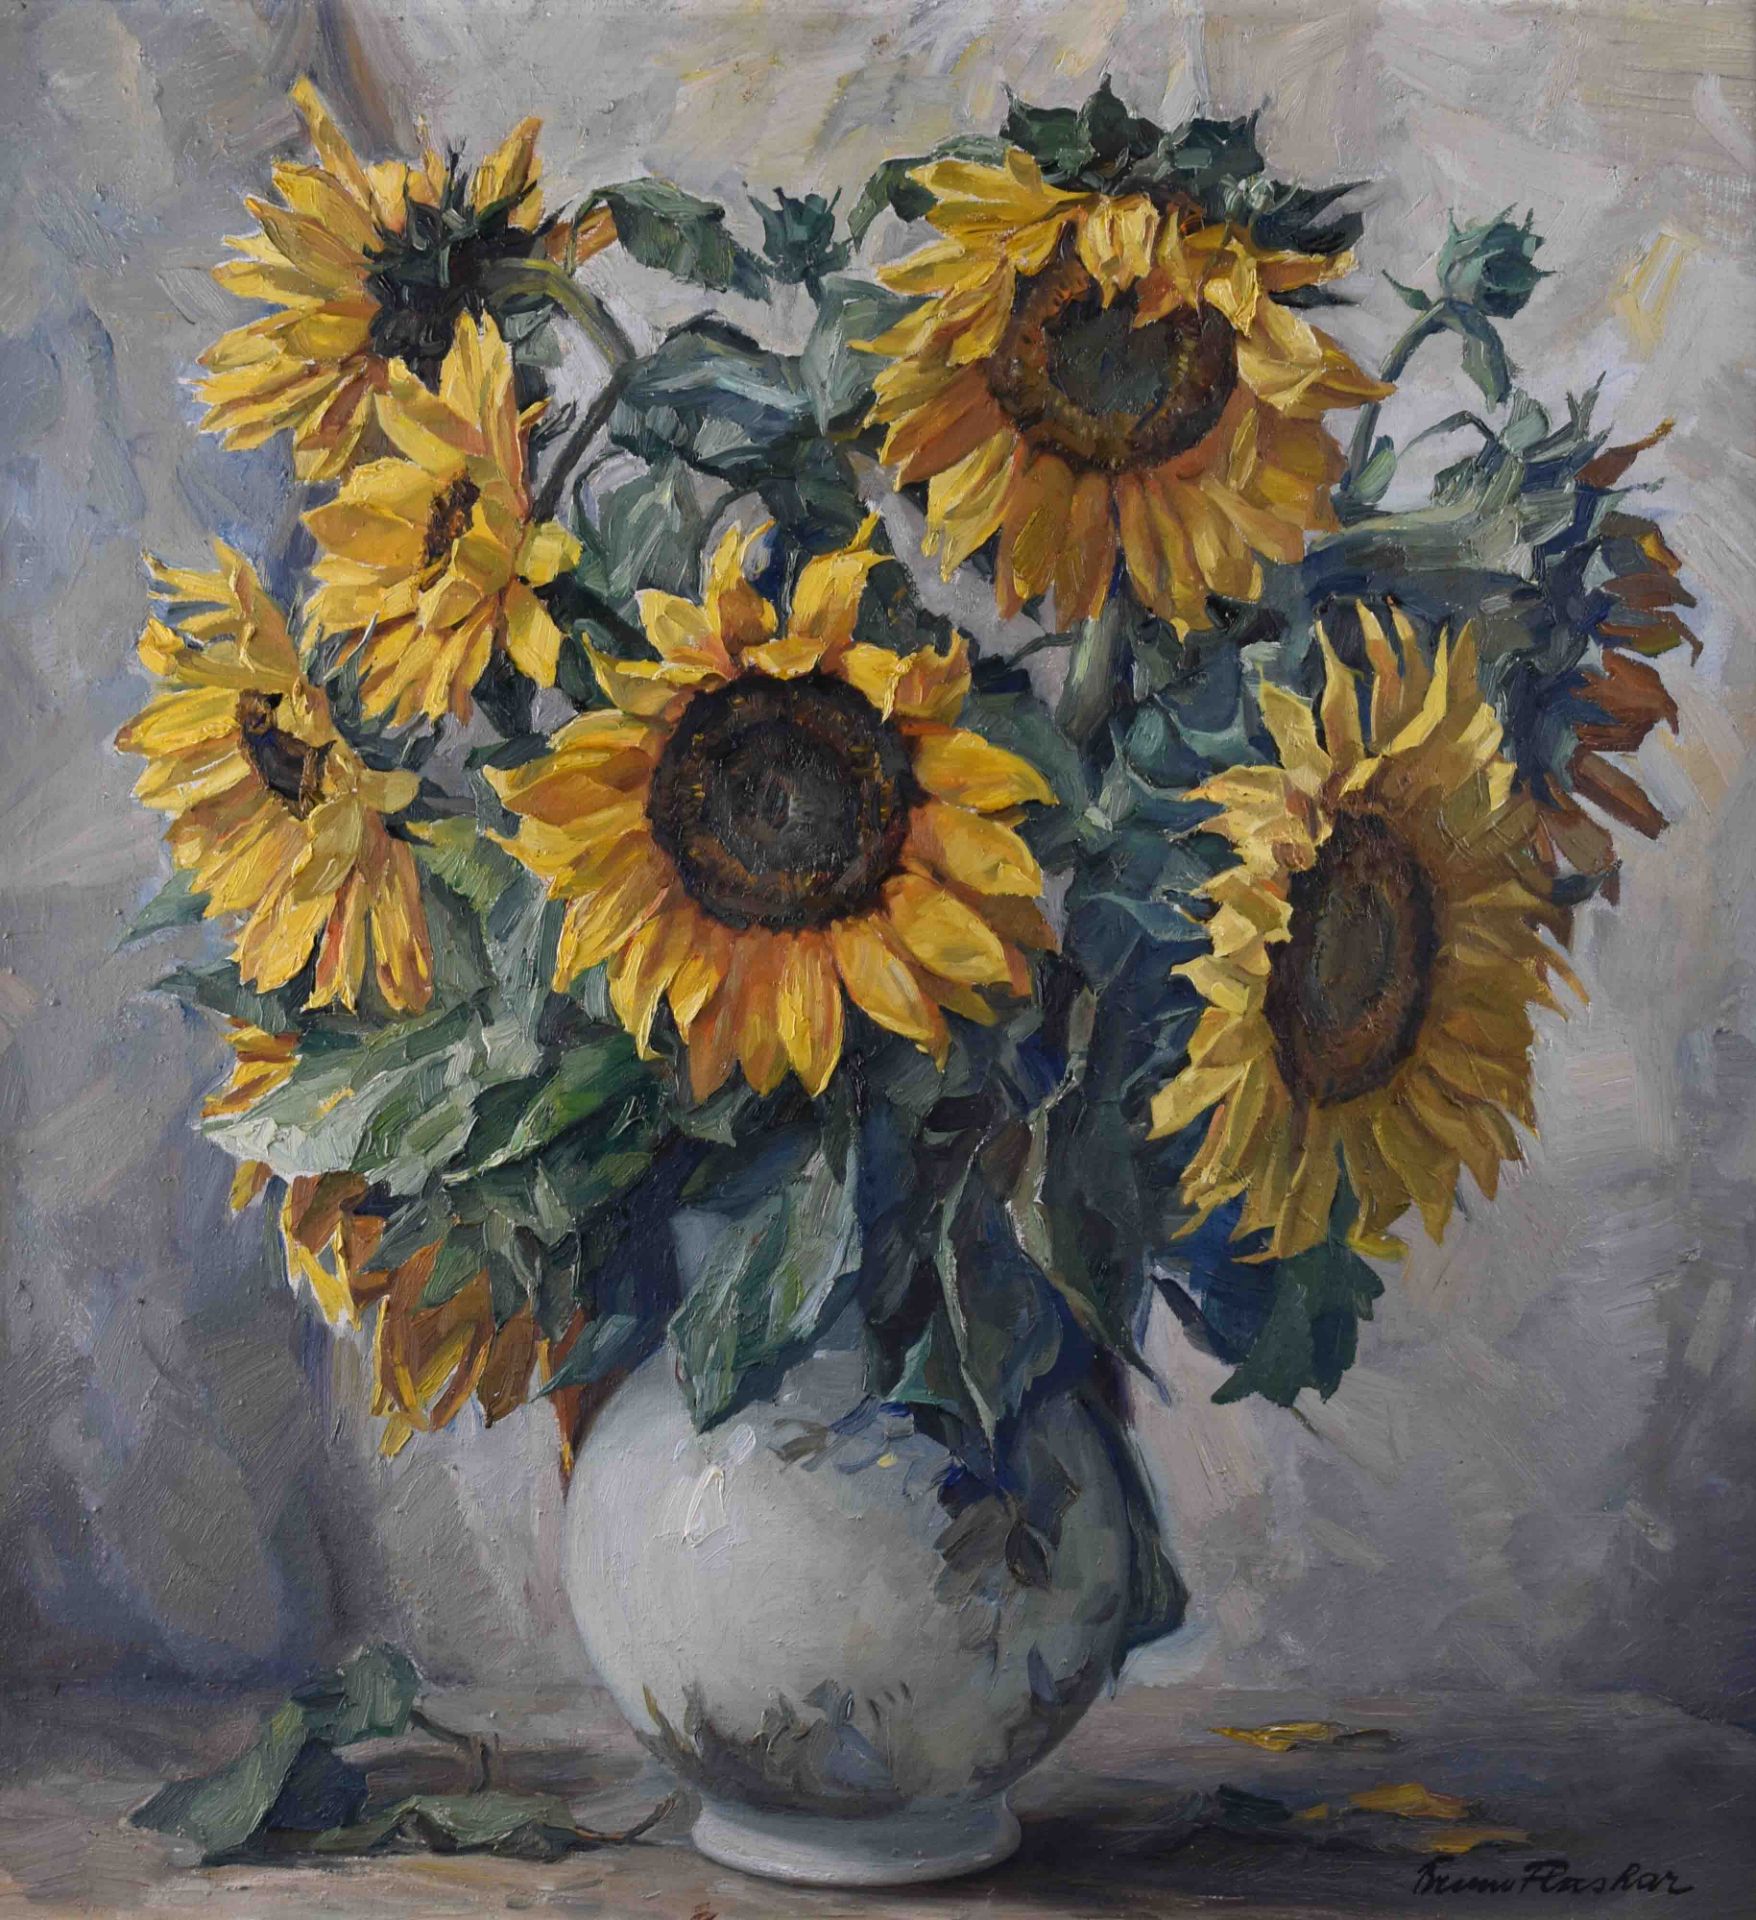 Bruno FLASHAR (1887-1961)"Sunflowers"painting oil / canvas, 85.5 cm x 80.5 cm, framed 103 cm x 97.